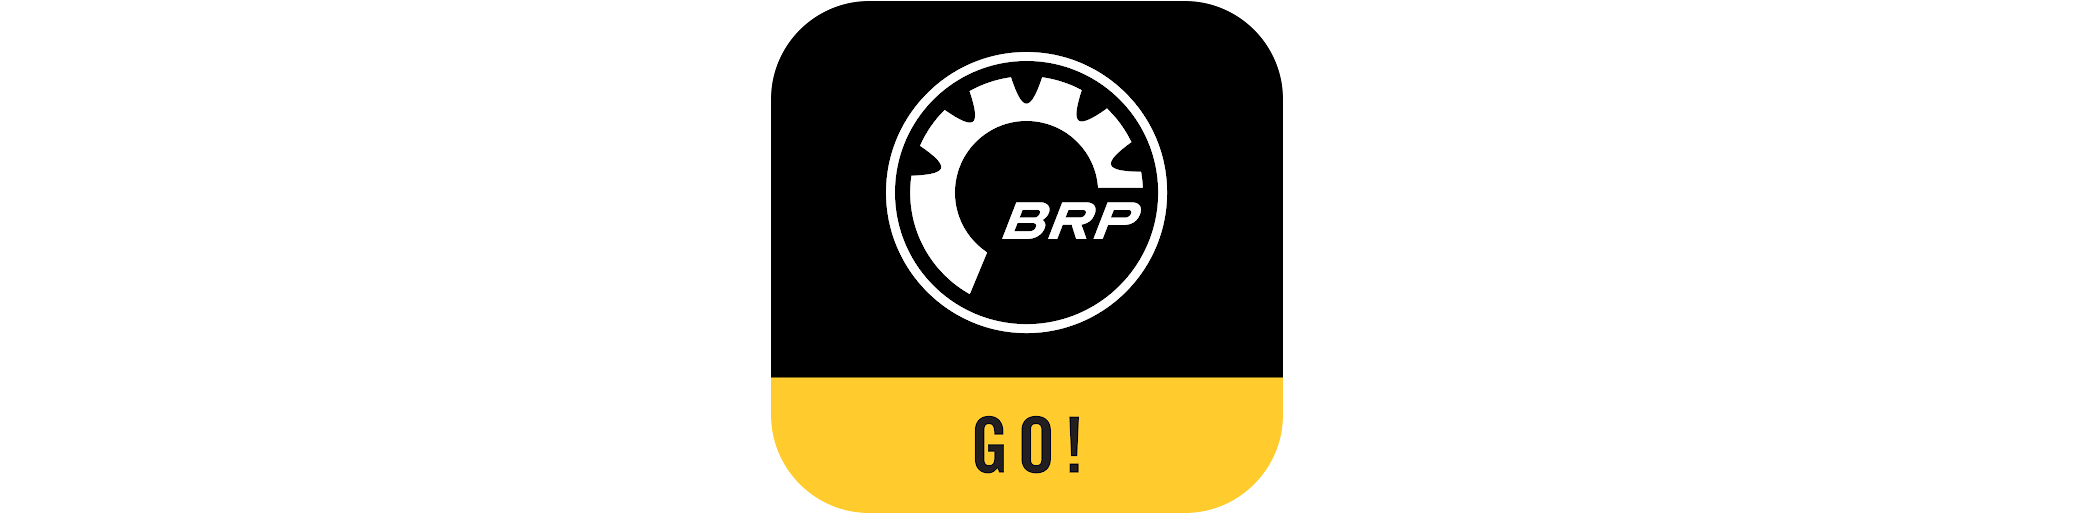 BRP GO! aplikacija logotip